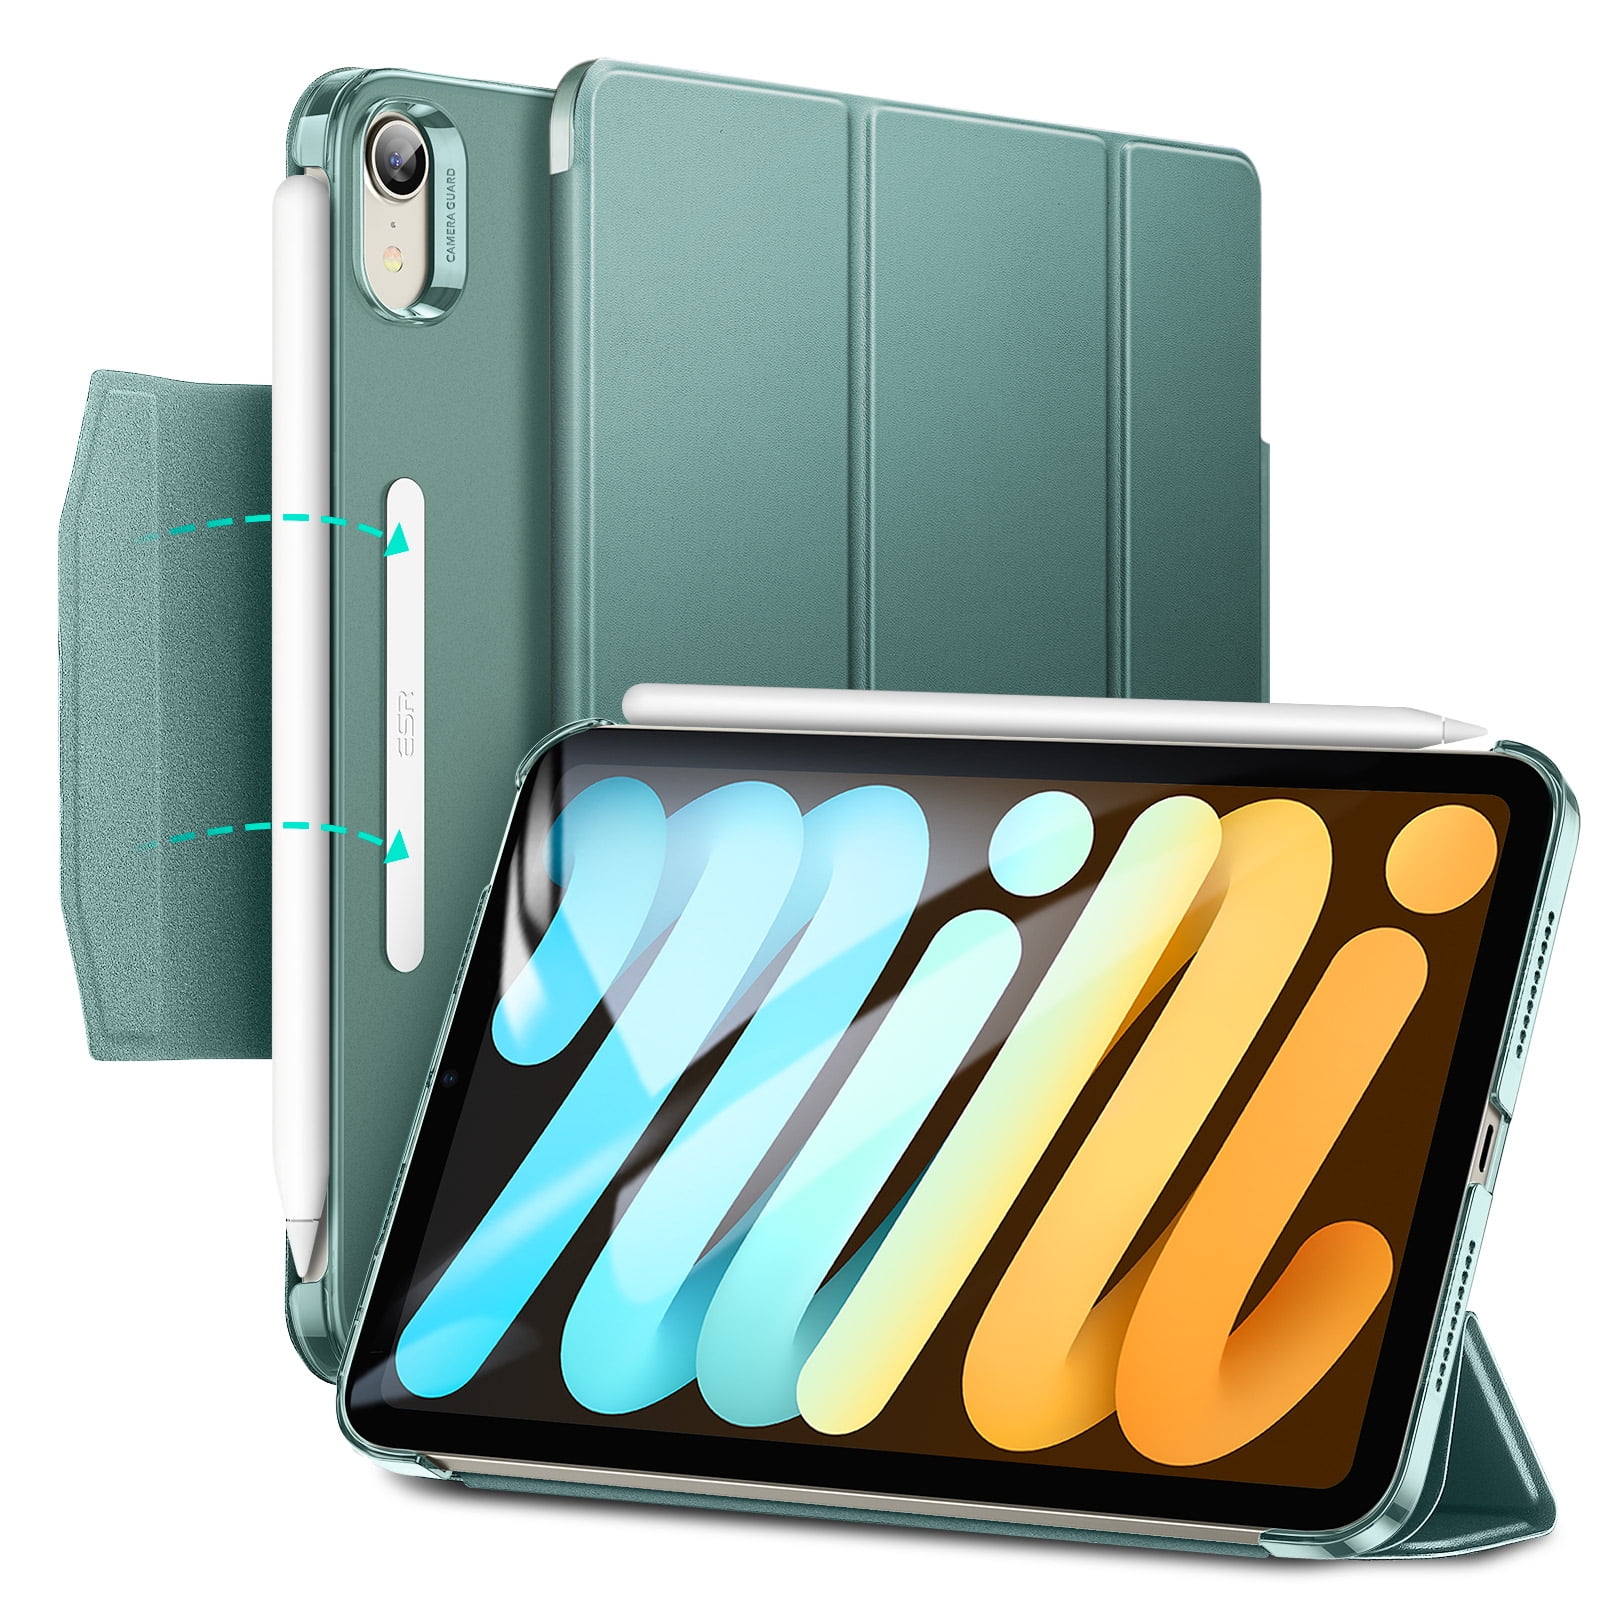 Orange Fruit iPad Case Mini 6 8.3 Pro 11 2021 Pro 12.9 In 2021 Mini 5 7.9 In Pro 12.9 10.2 Inch Air 4 10.9 Inch 2020 Custom Mini 4 7.9 In